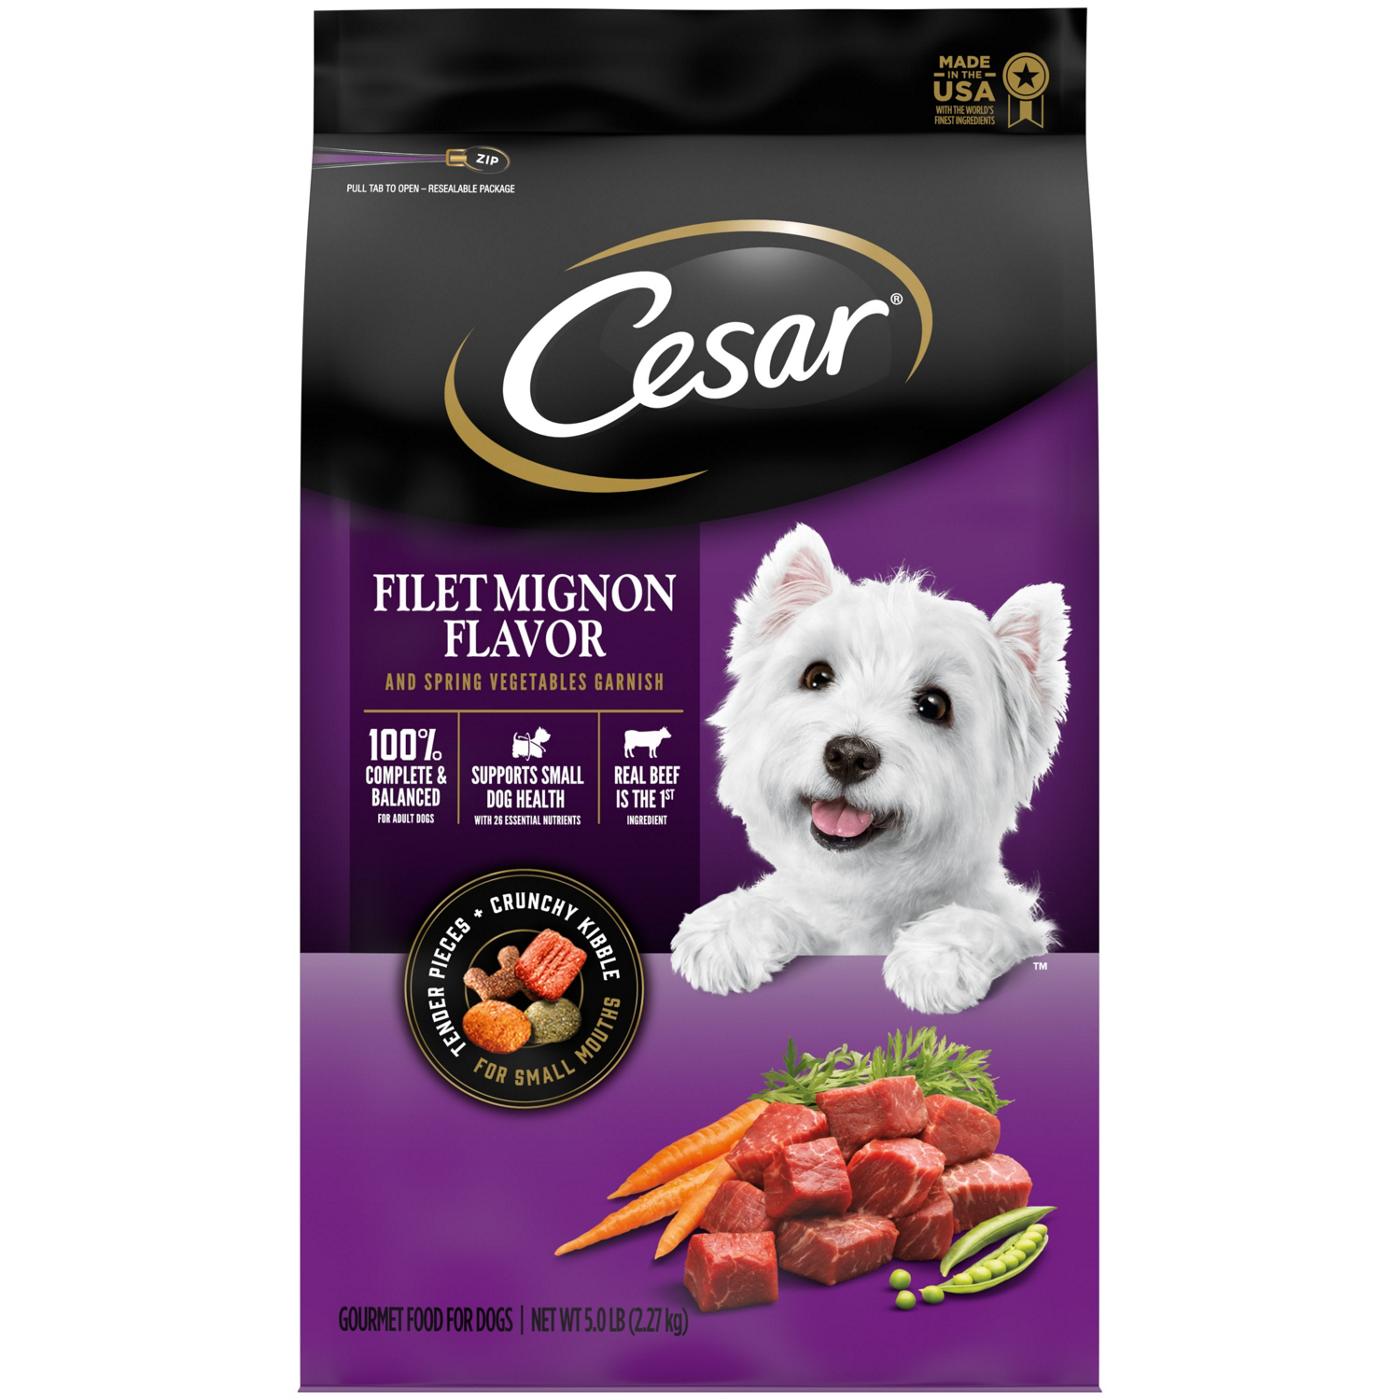 Cesar Filet Mignon Flavor Dry Dog Food; image 1 of 4